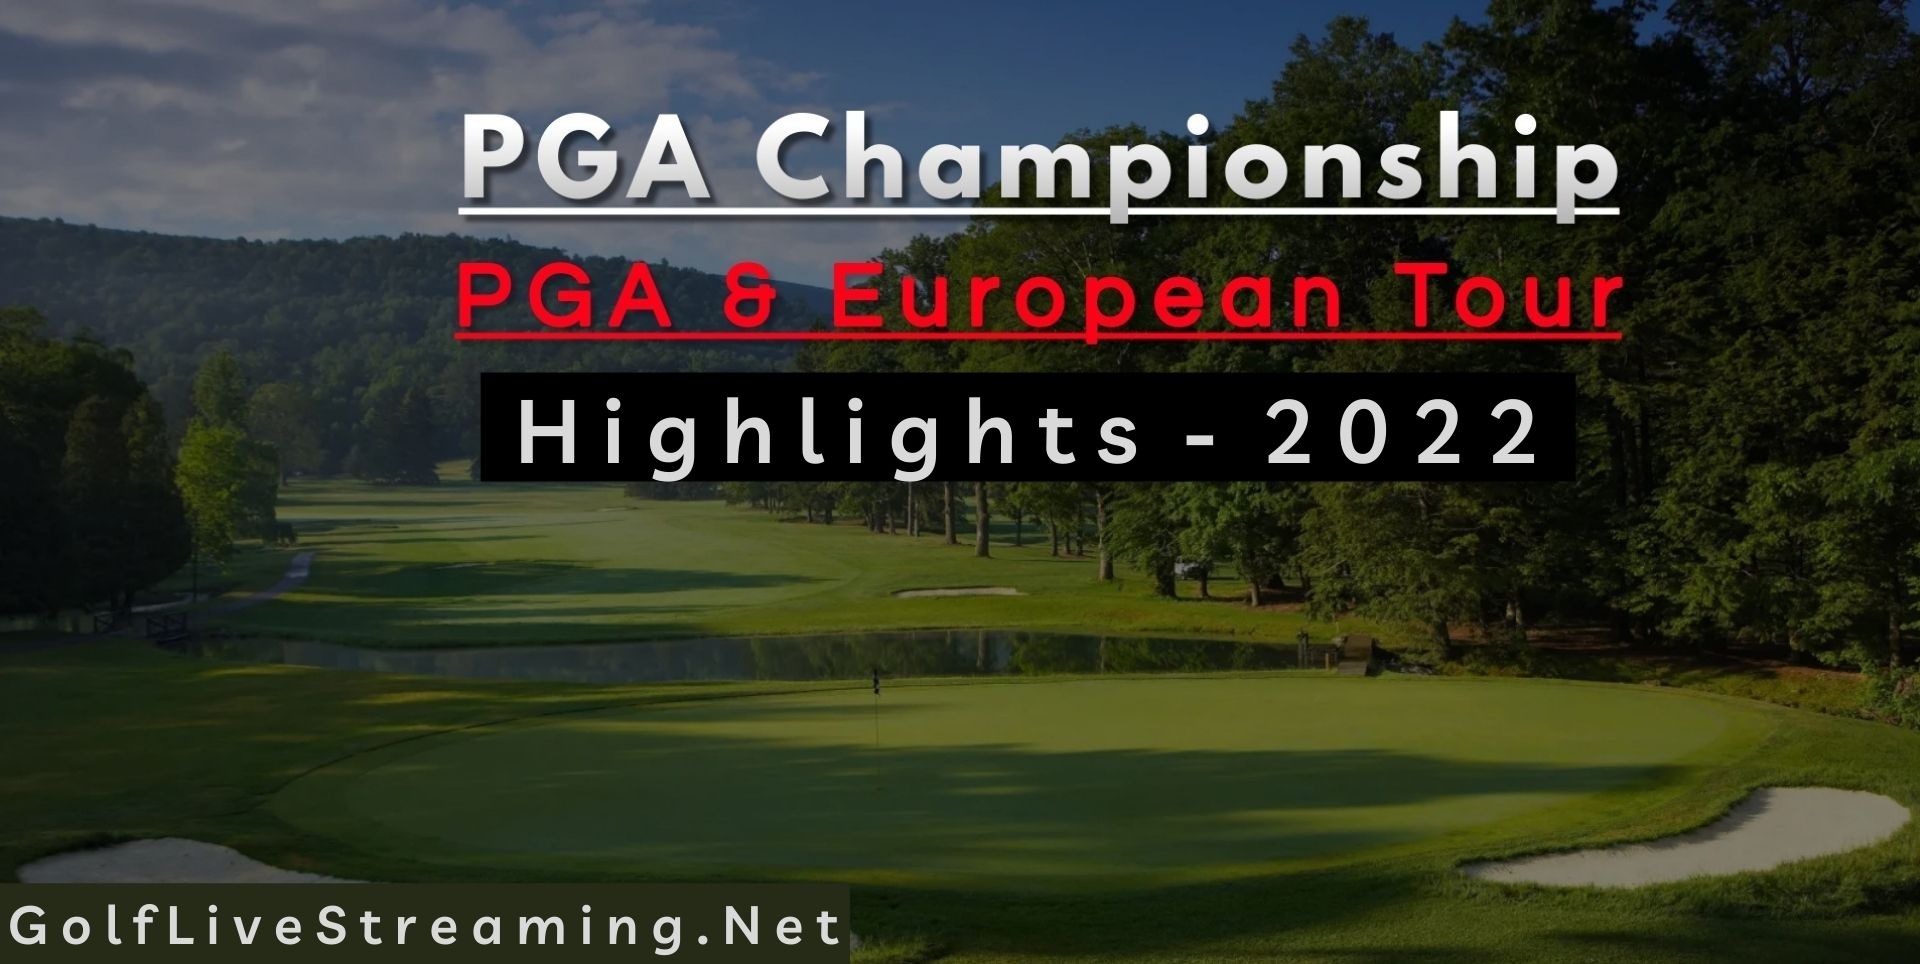 PGA Championship Round 2 Highlights 2022